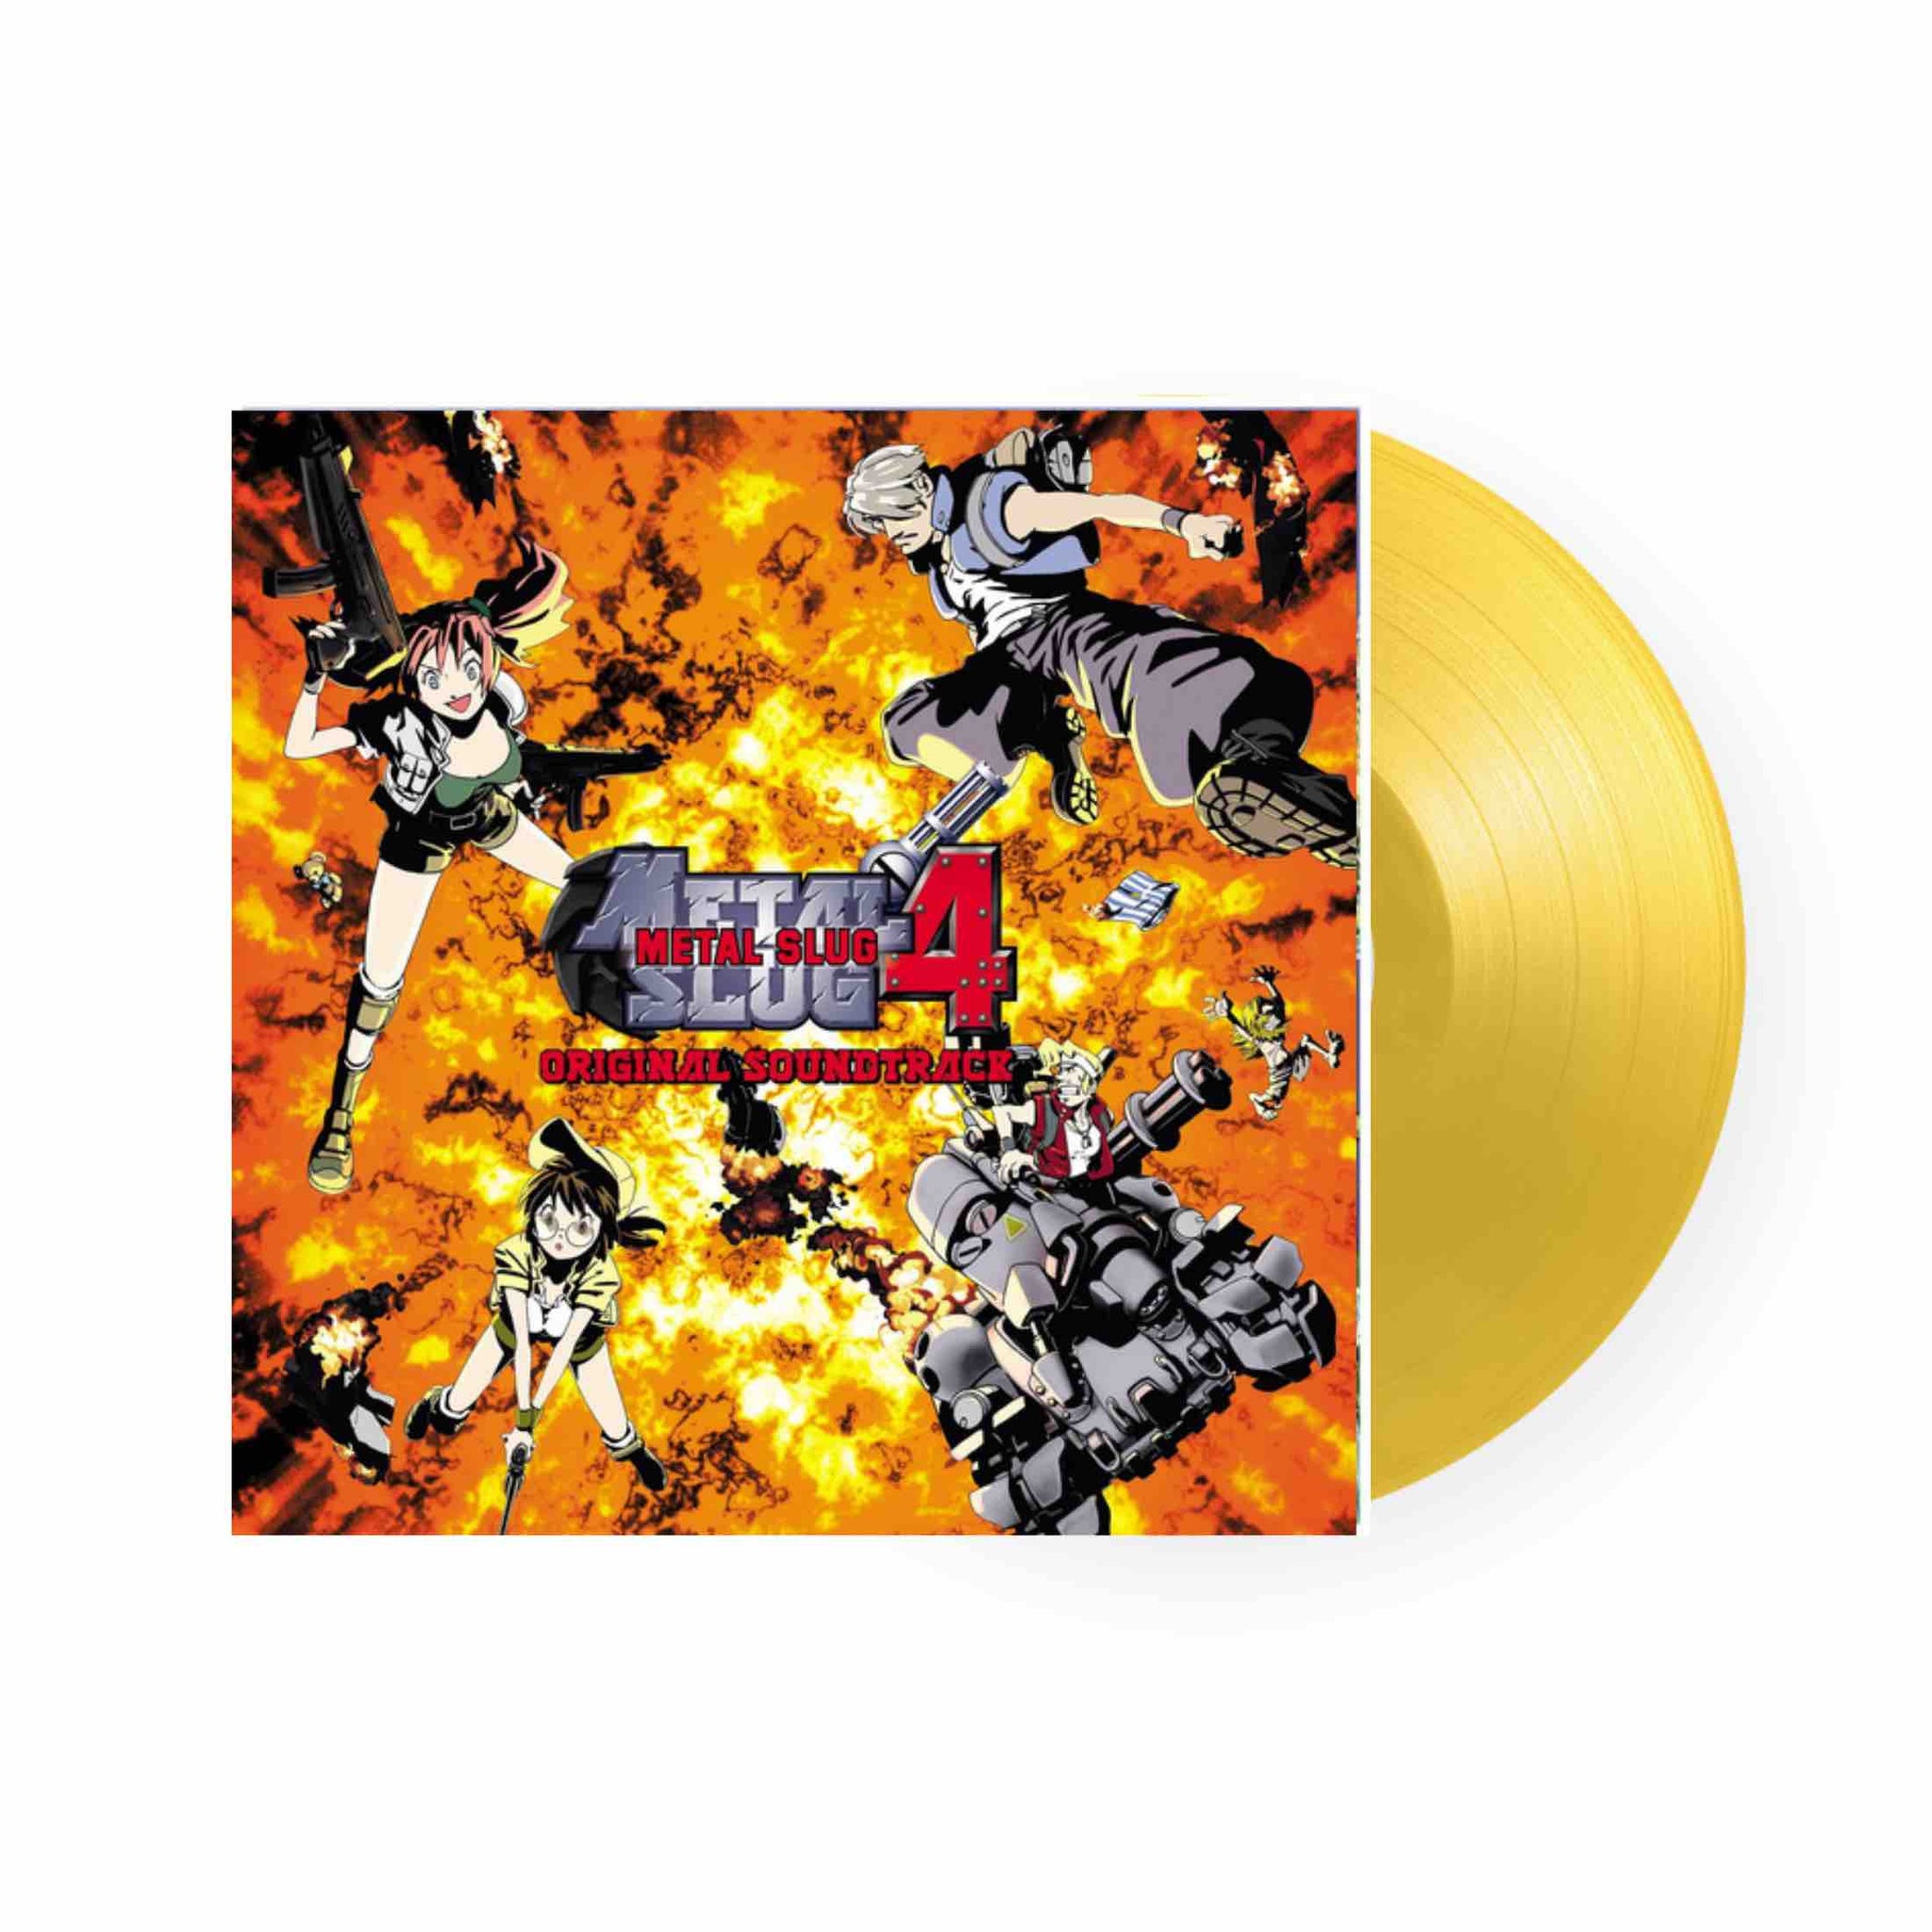 SNK Sound Team - Metal Slug 4 OST LP (Yellow Vinyl)